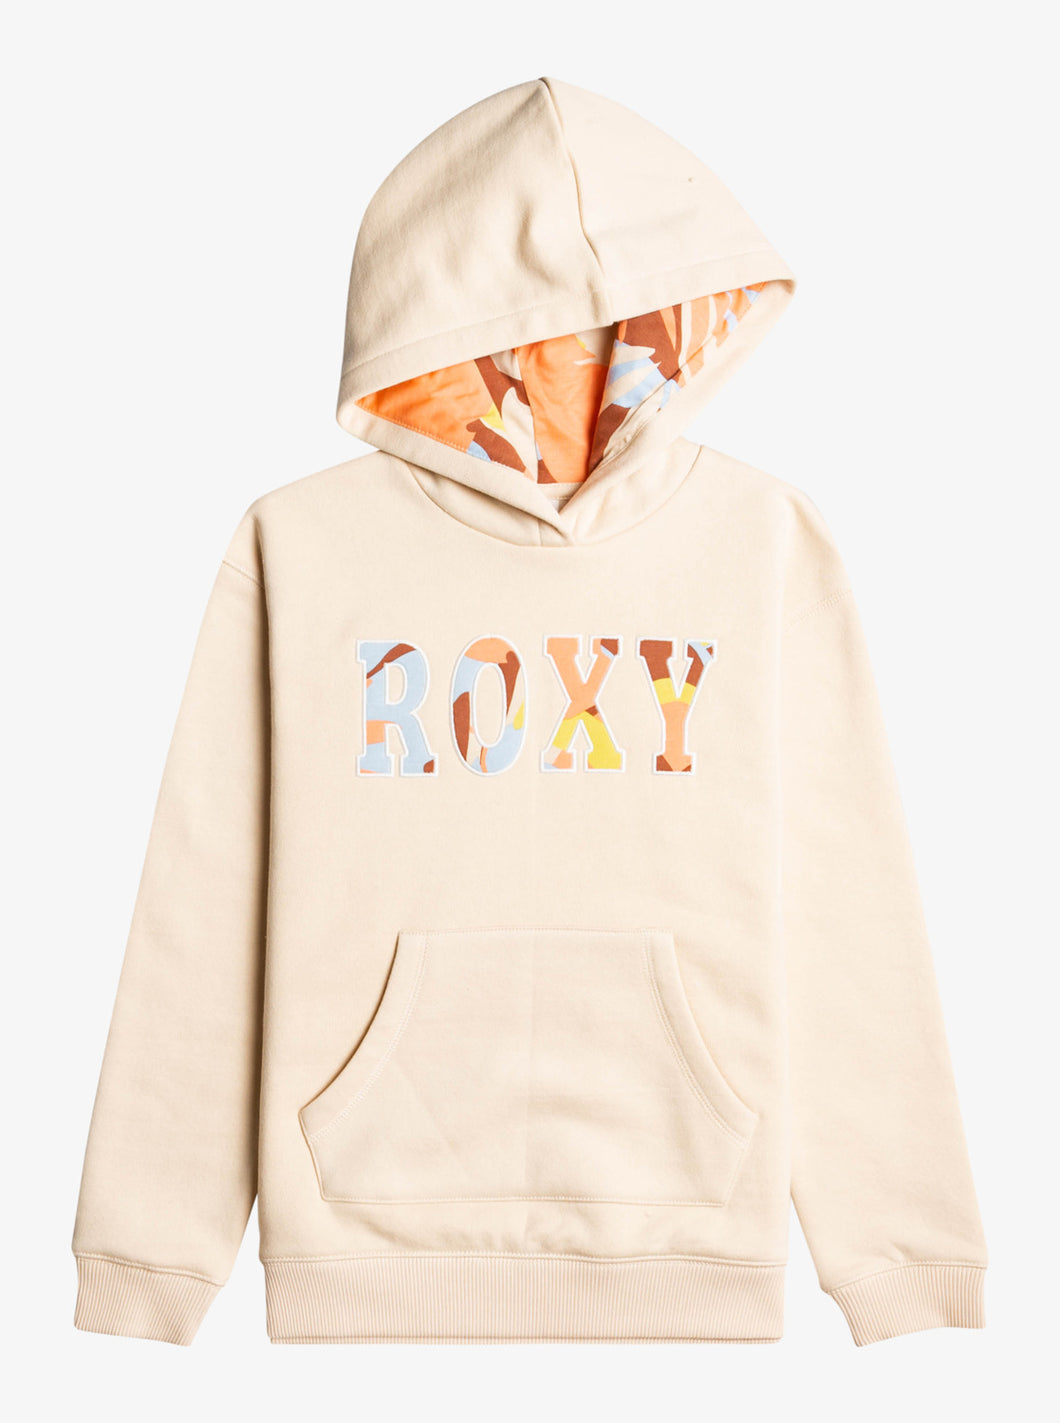 Roxy Girl “Hope You Believe” Logo Hoodie in Tapioca: Size 7 to 16